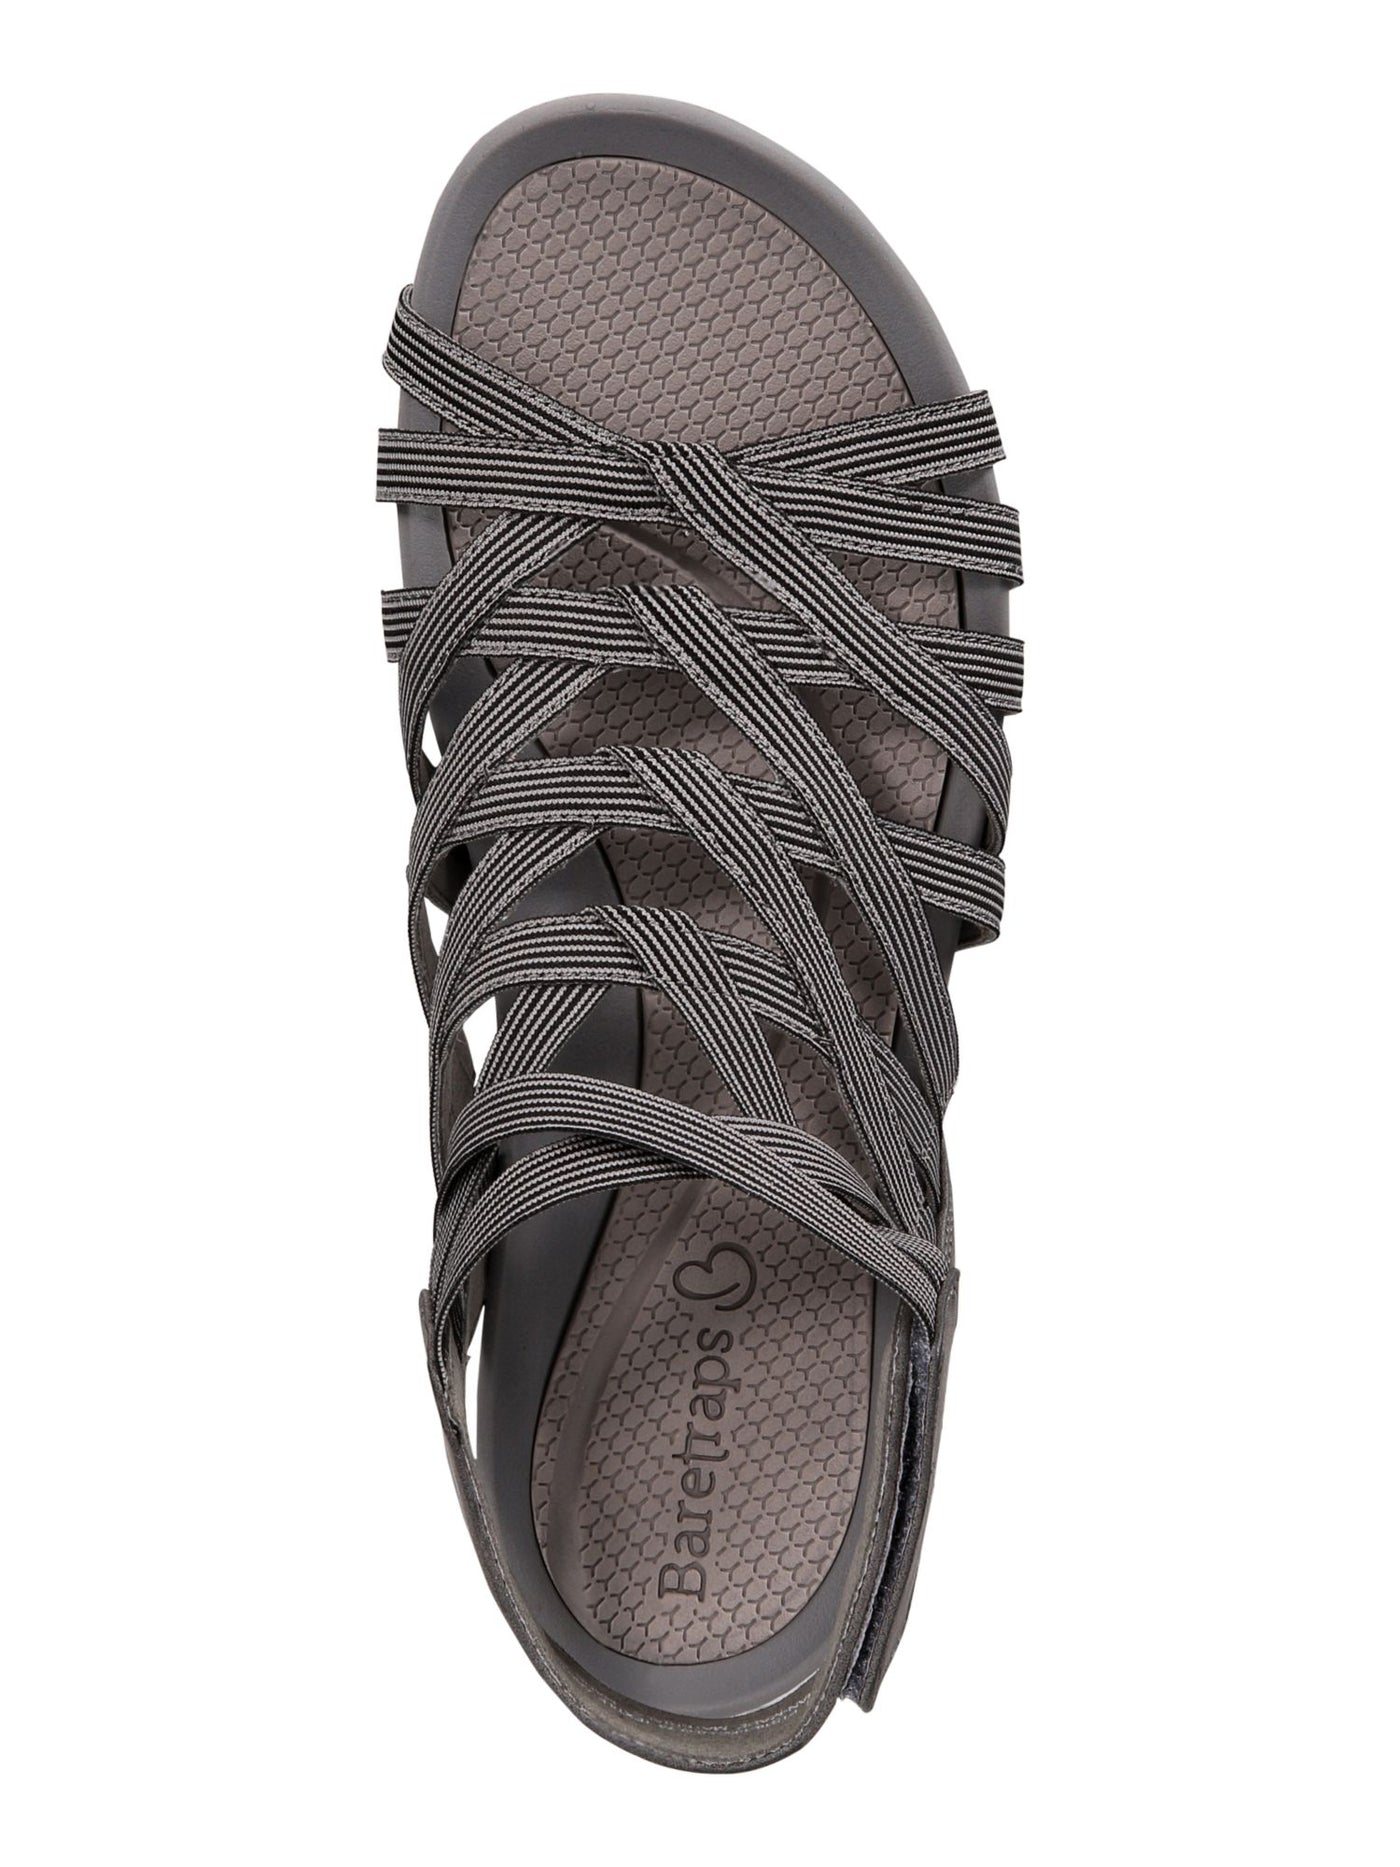 BARETRAPS Womens Gray Rebound Technology Stretch Elastic Straps Arch Support Comfort Slip Resistant Sammie Round Toe Gladiator Sandals Shoes 5.5 M